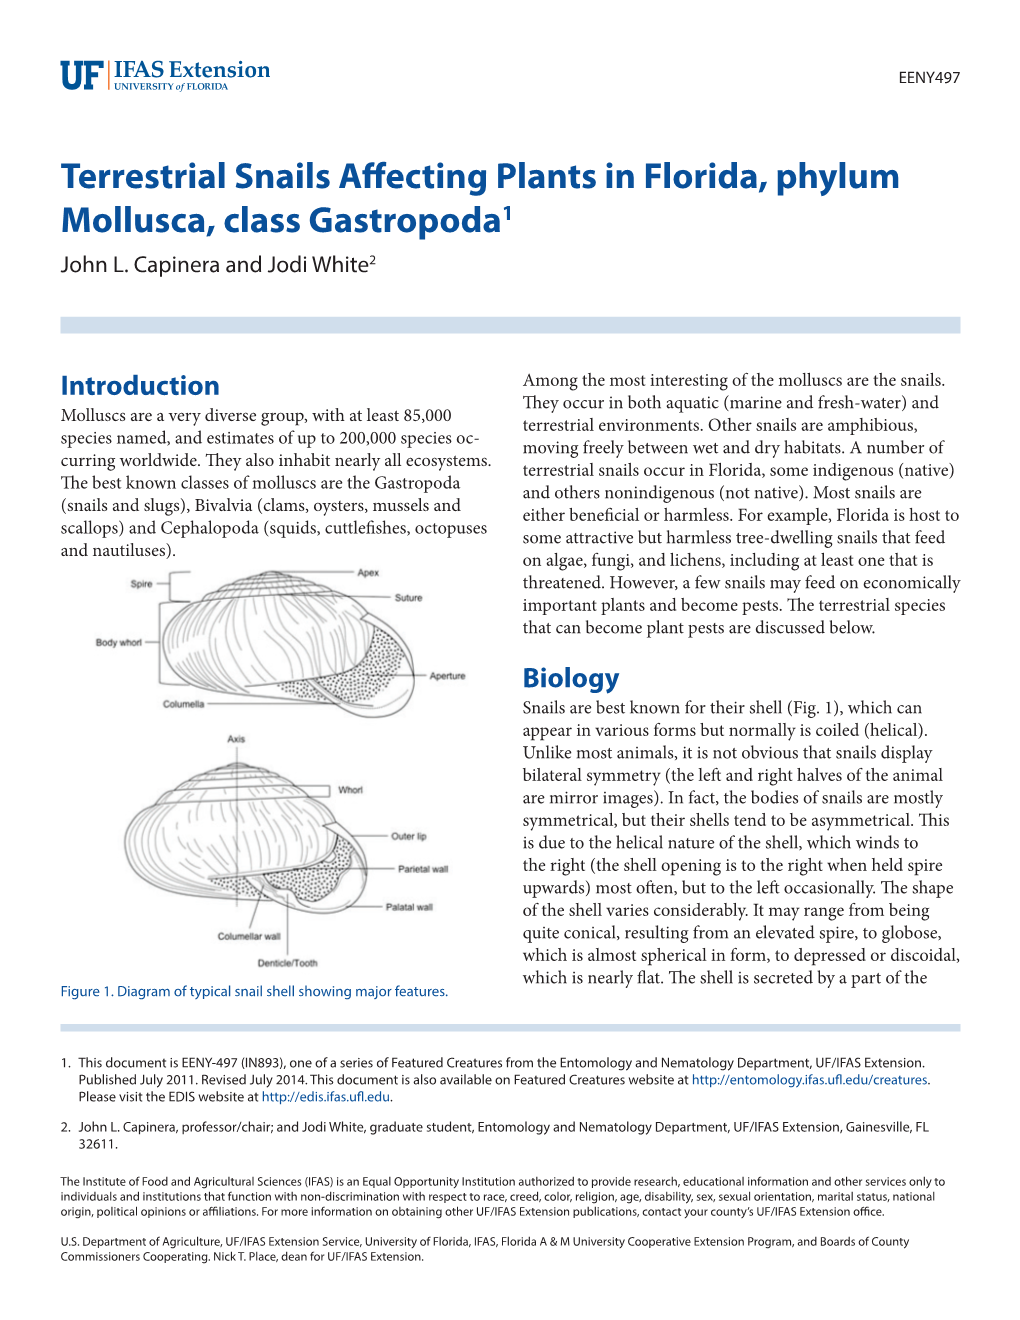 Terrestrial Snails Affecting Plants in Florida, Phylum Mollusca, Class Gastropoda1 John L